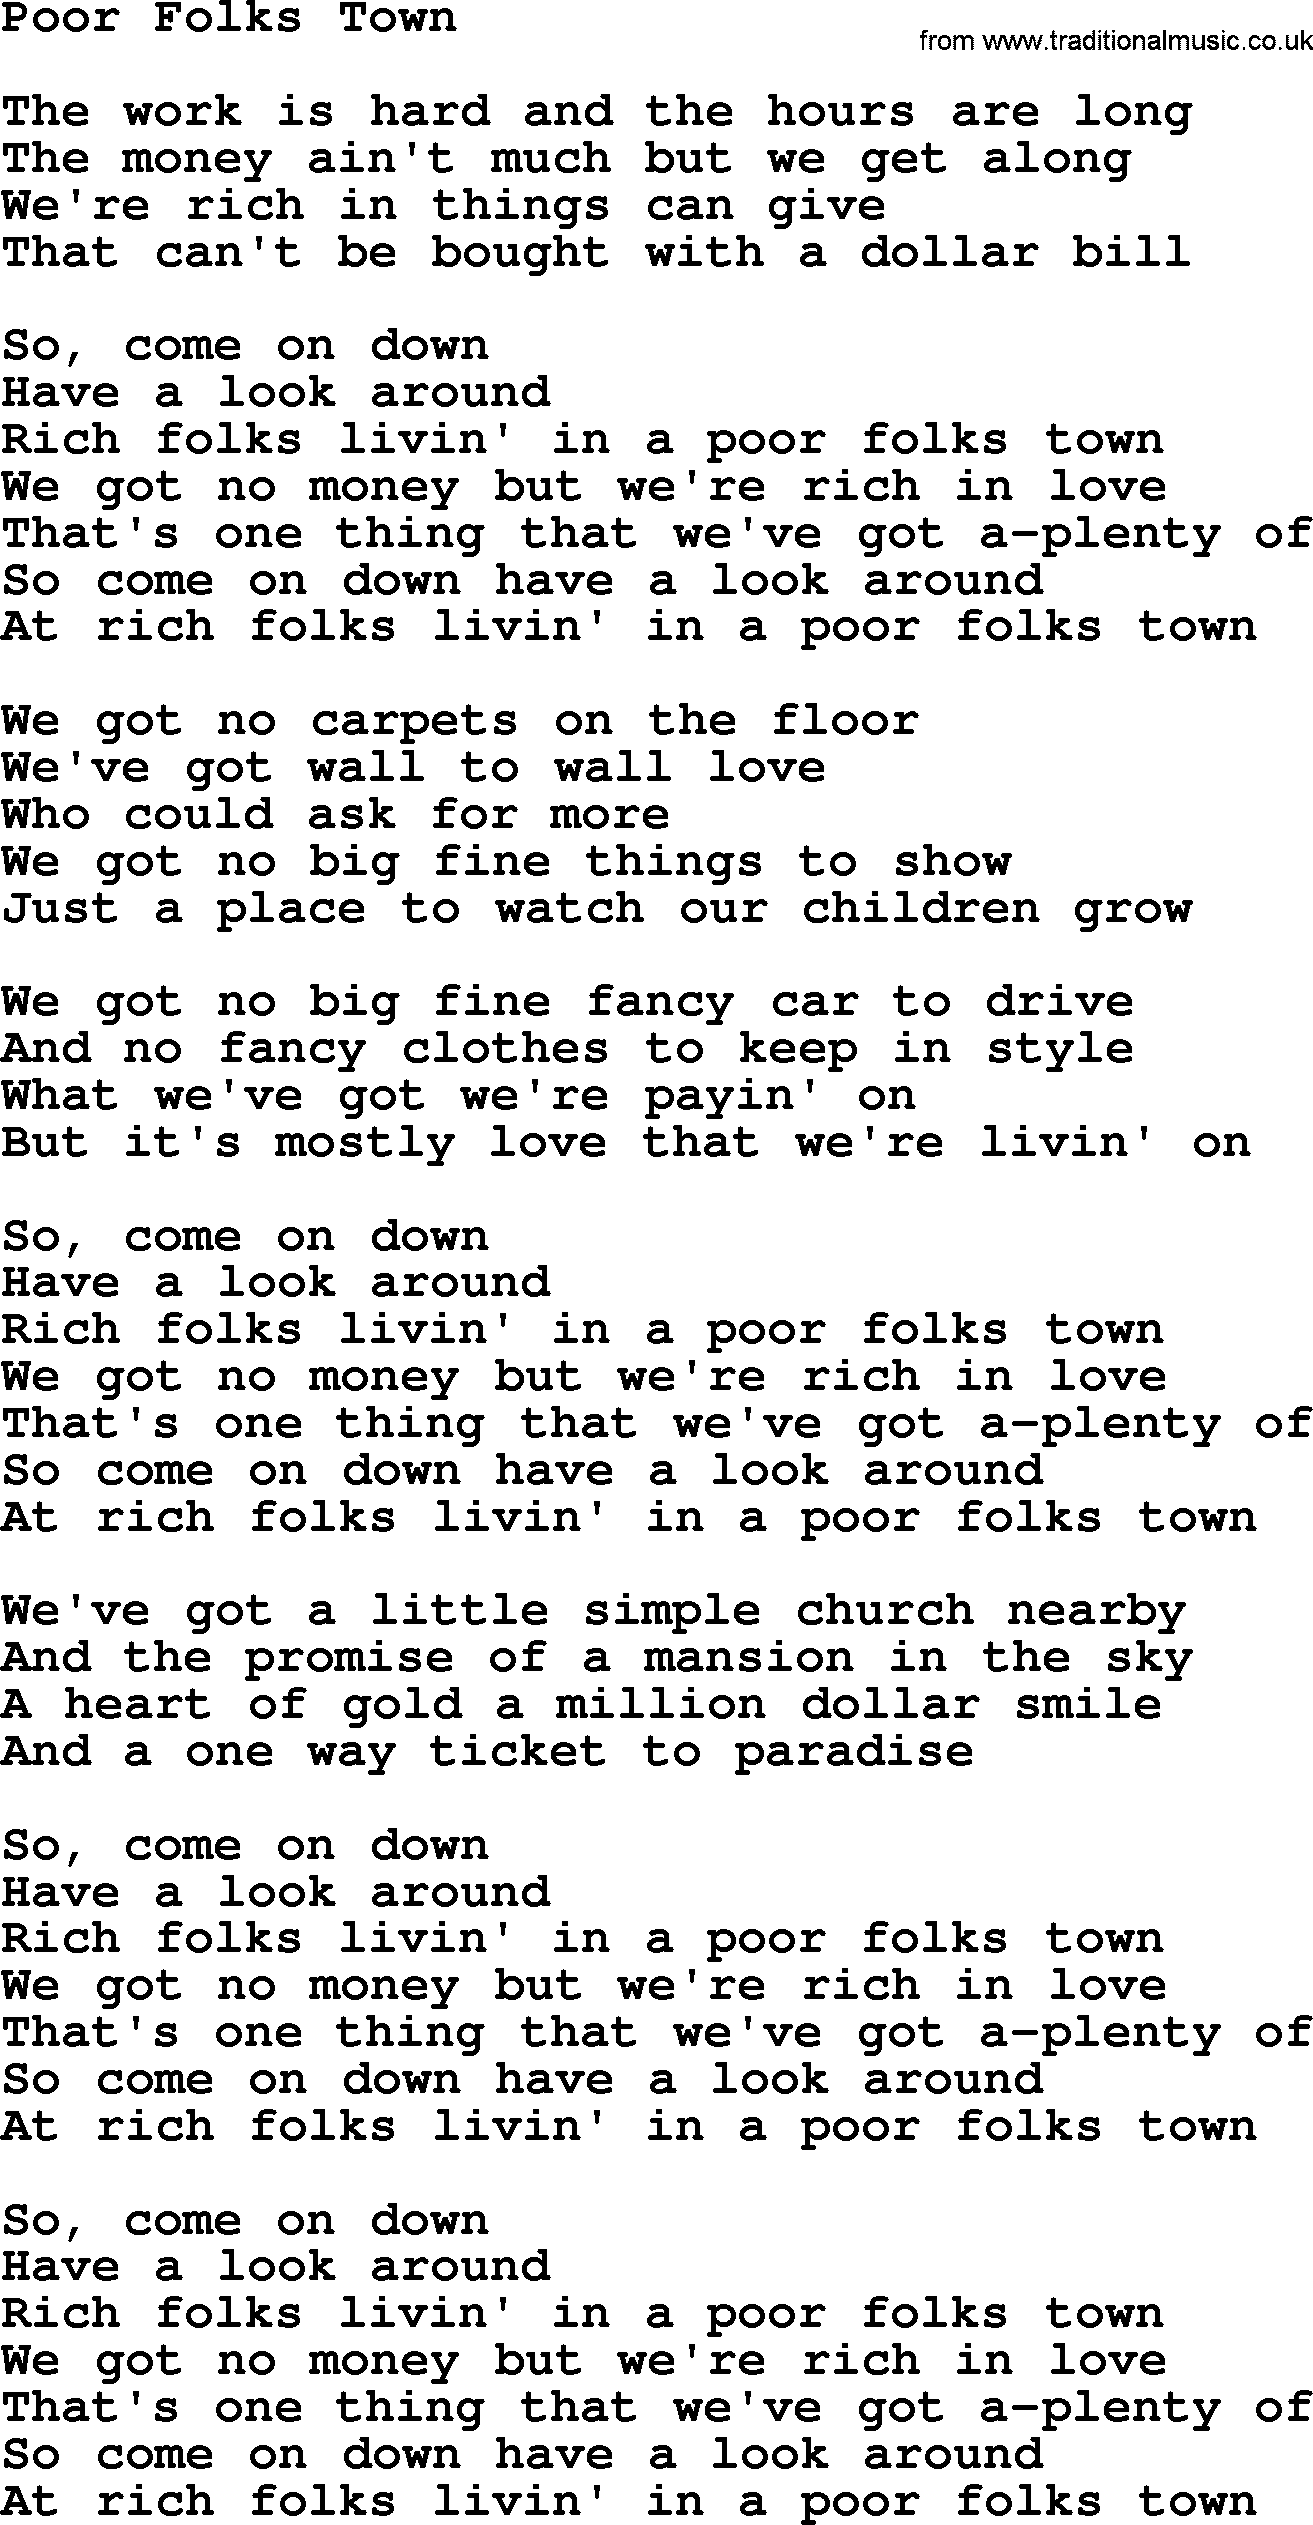 Dolly Parton song Poor Folks Town.txt lyrics